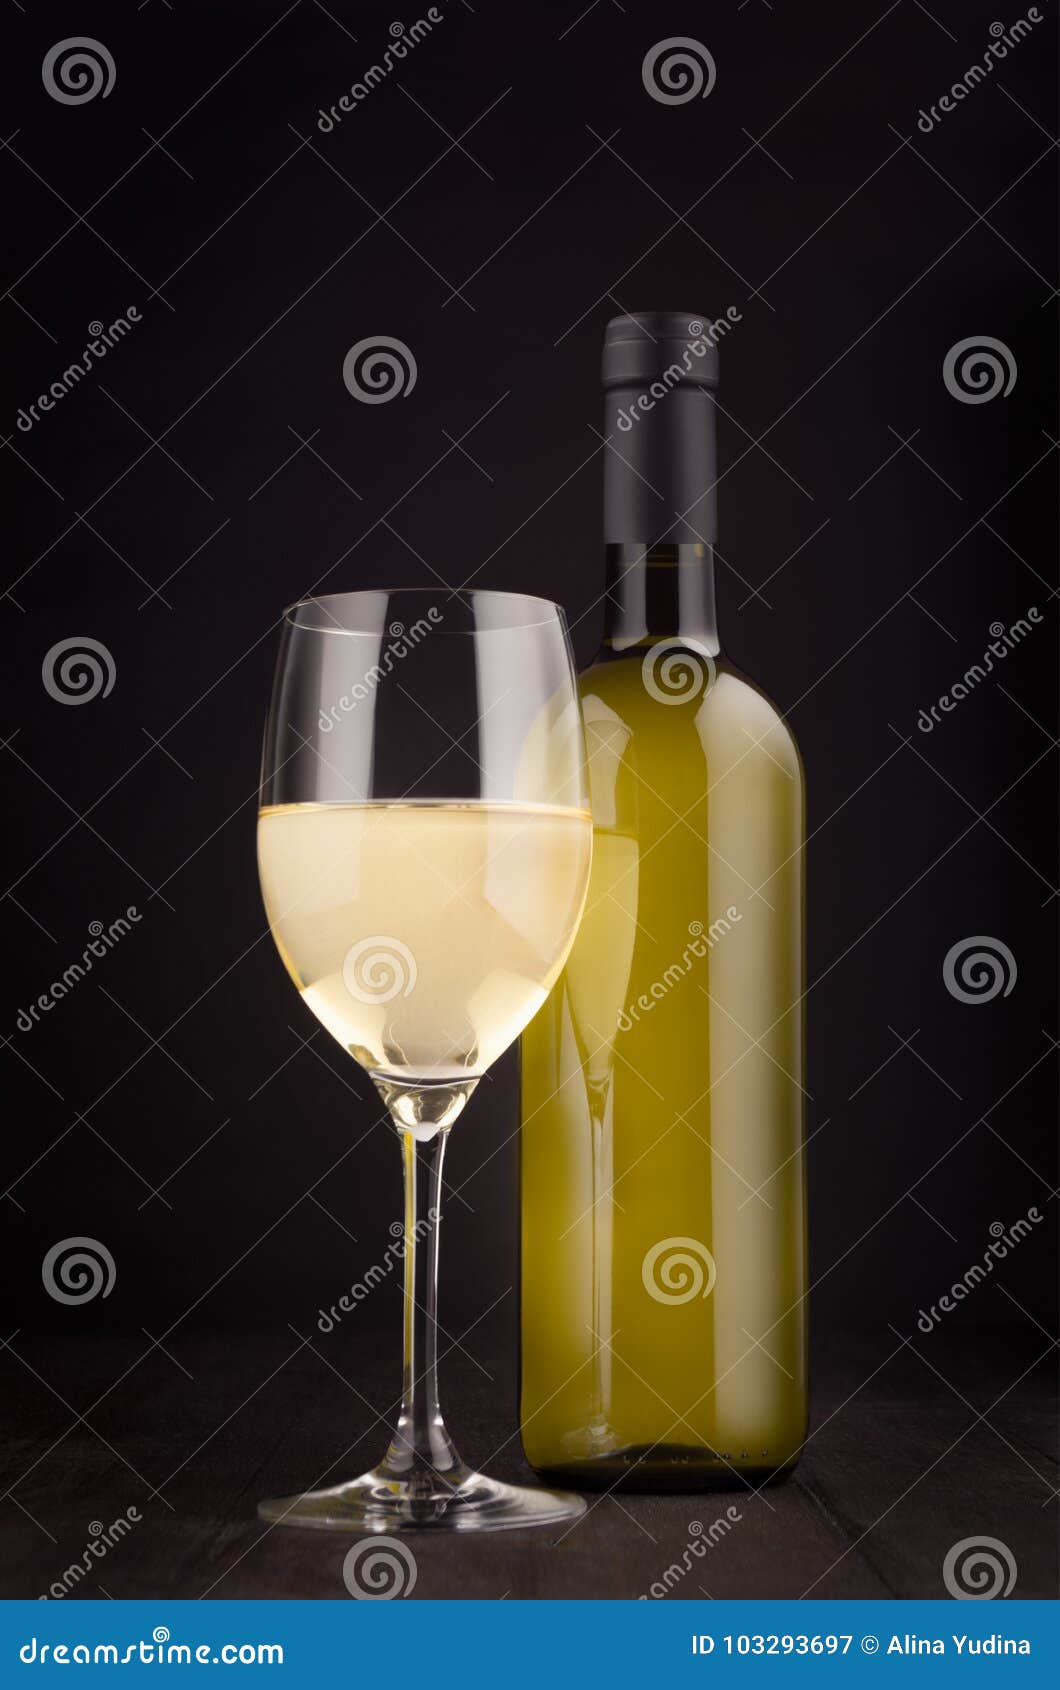 Download Green Bottle Of White Wine And Wine Glass Mock Up On Elegant Dark Black Wooden Background Vertical Stock Image Image Of Menu Board 103293697